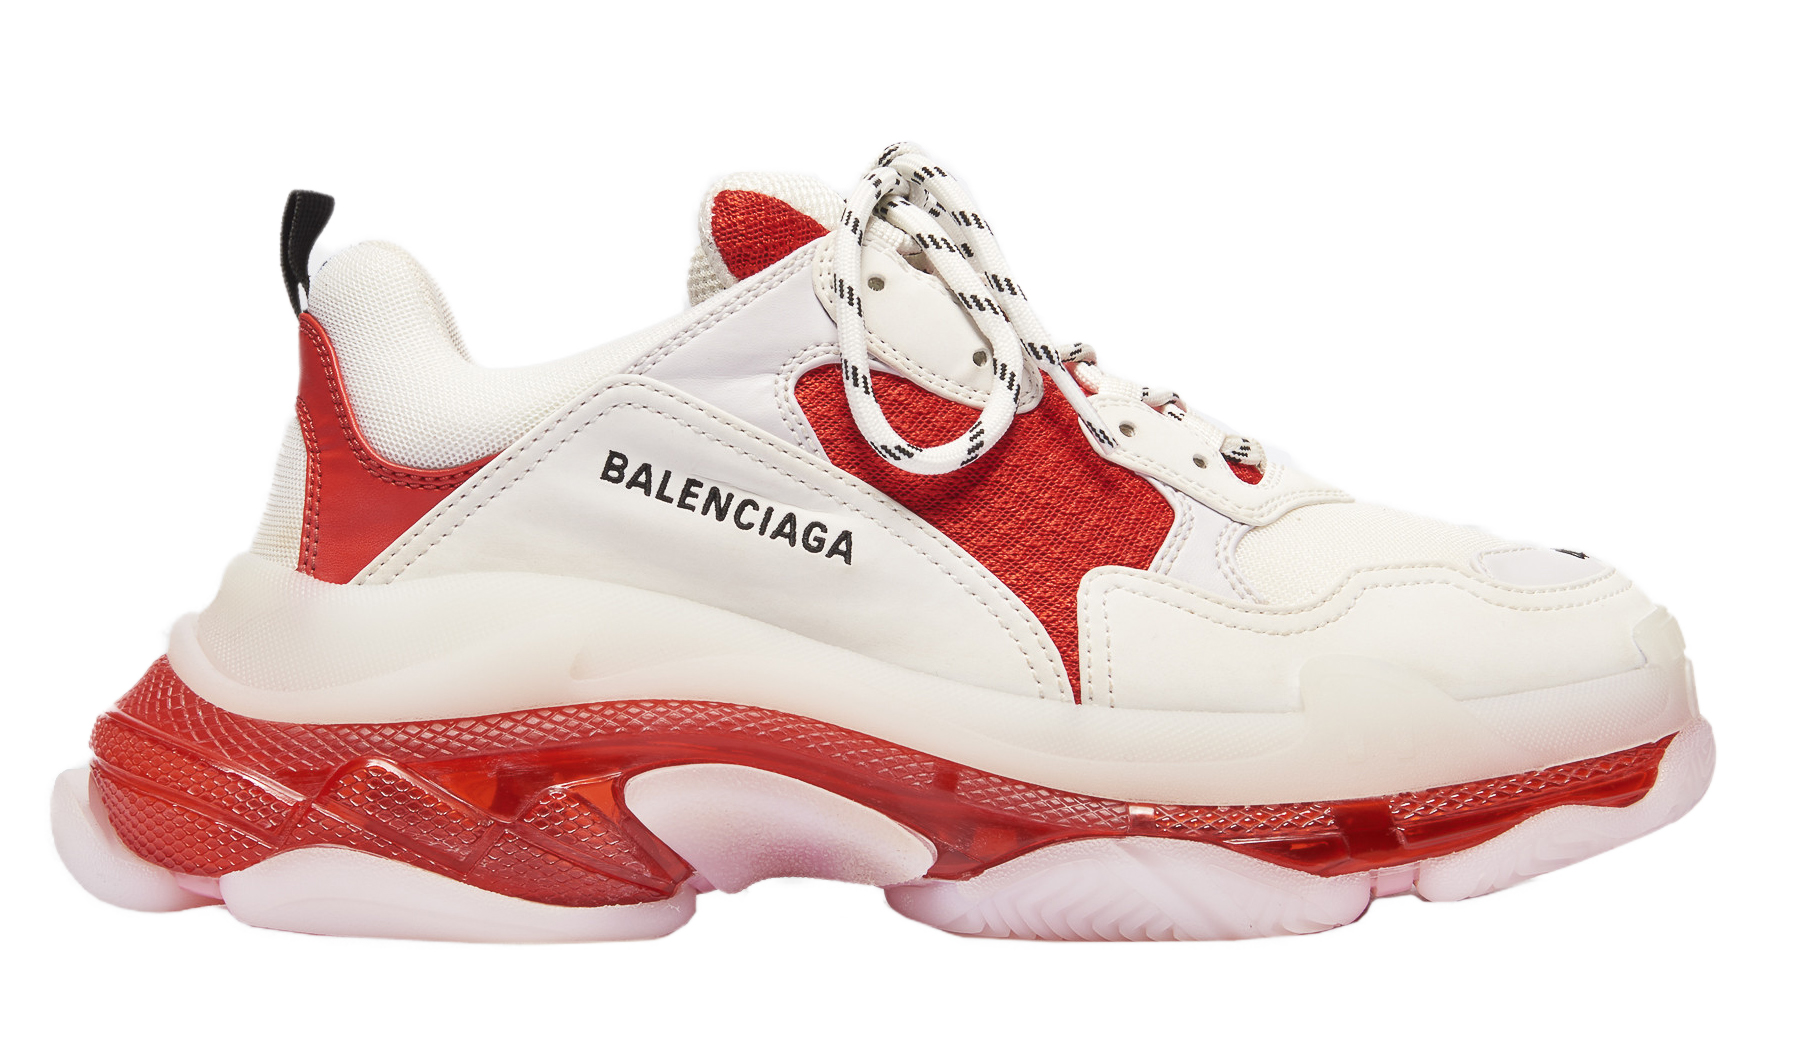 Balenciaga Sneakers triple s Women 524039W2FS28100 Leather 950